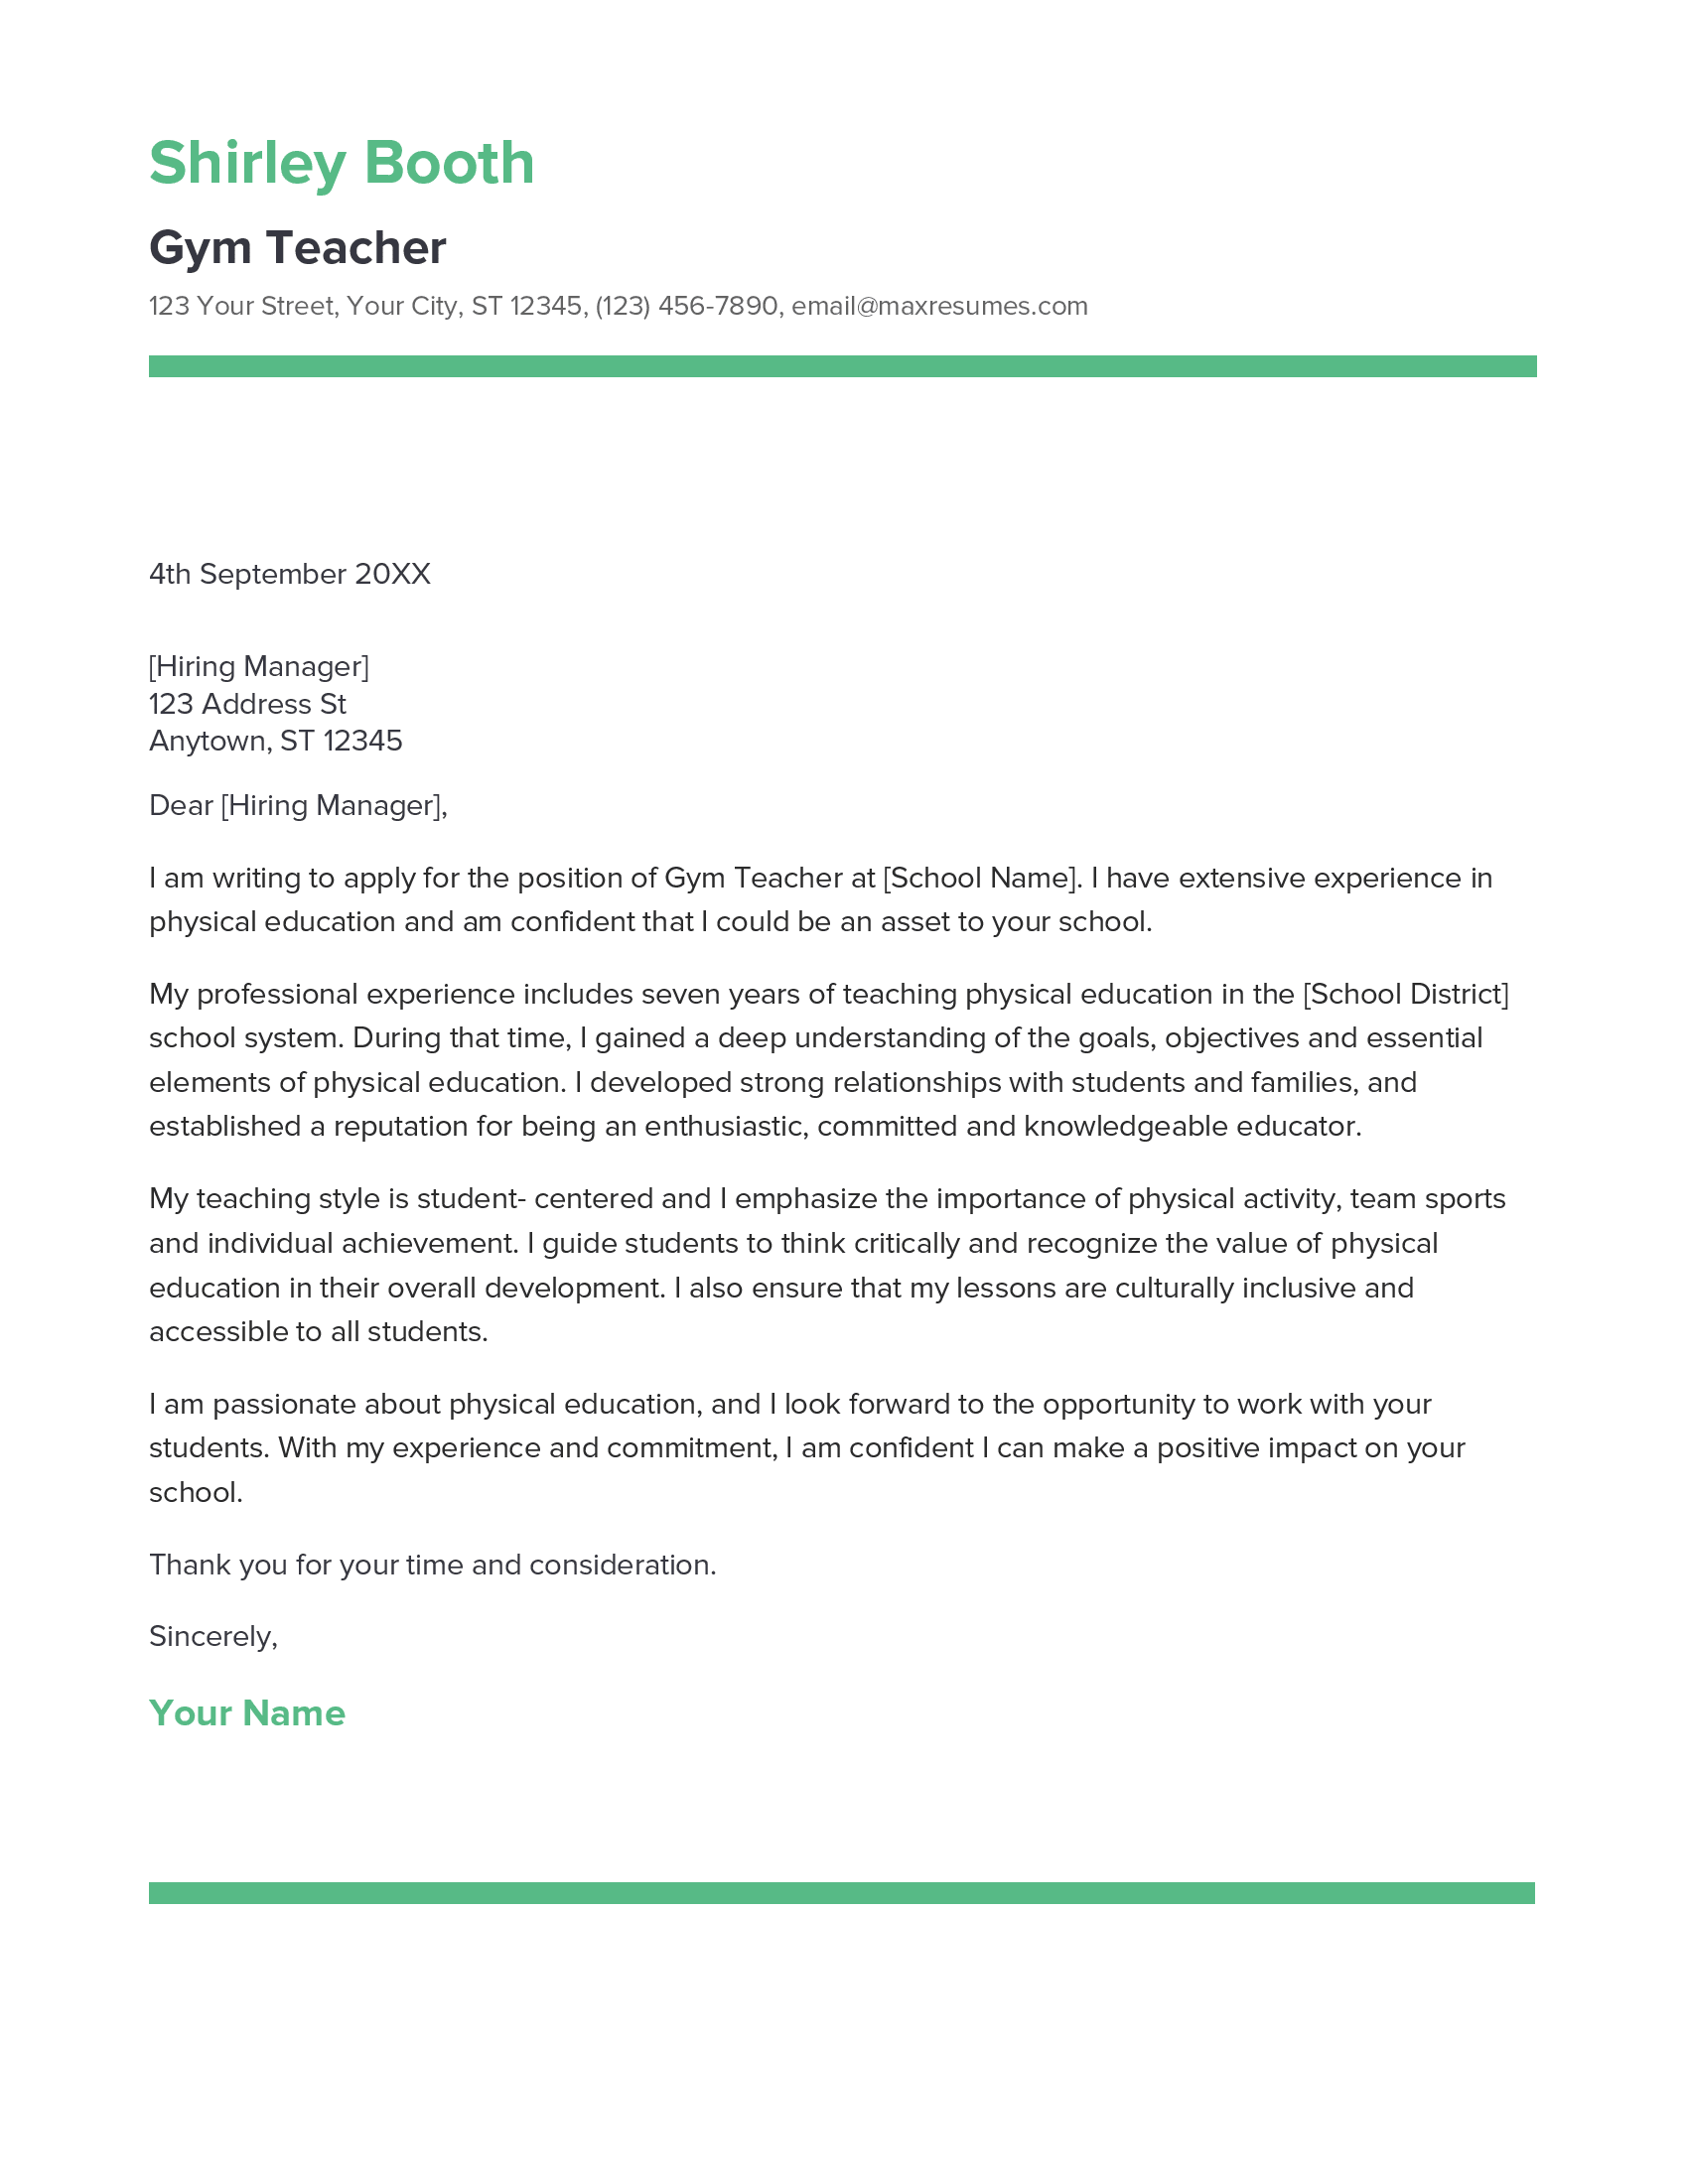 Gym Teacher Cover Letter Example